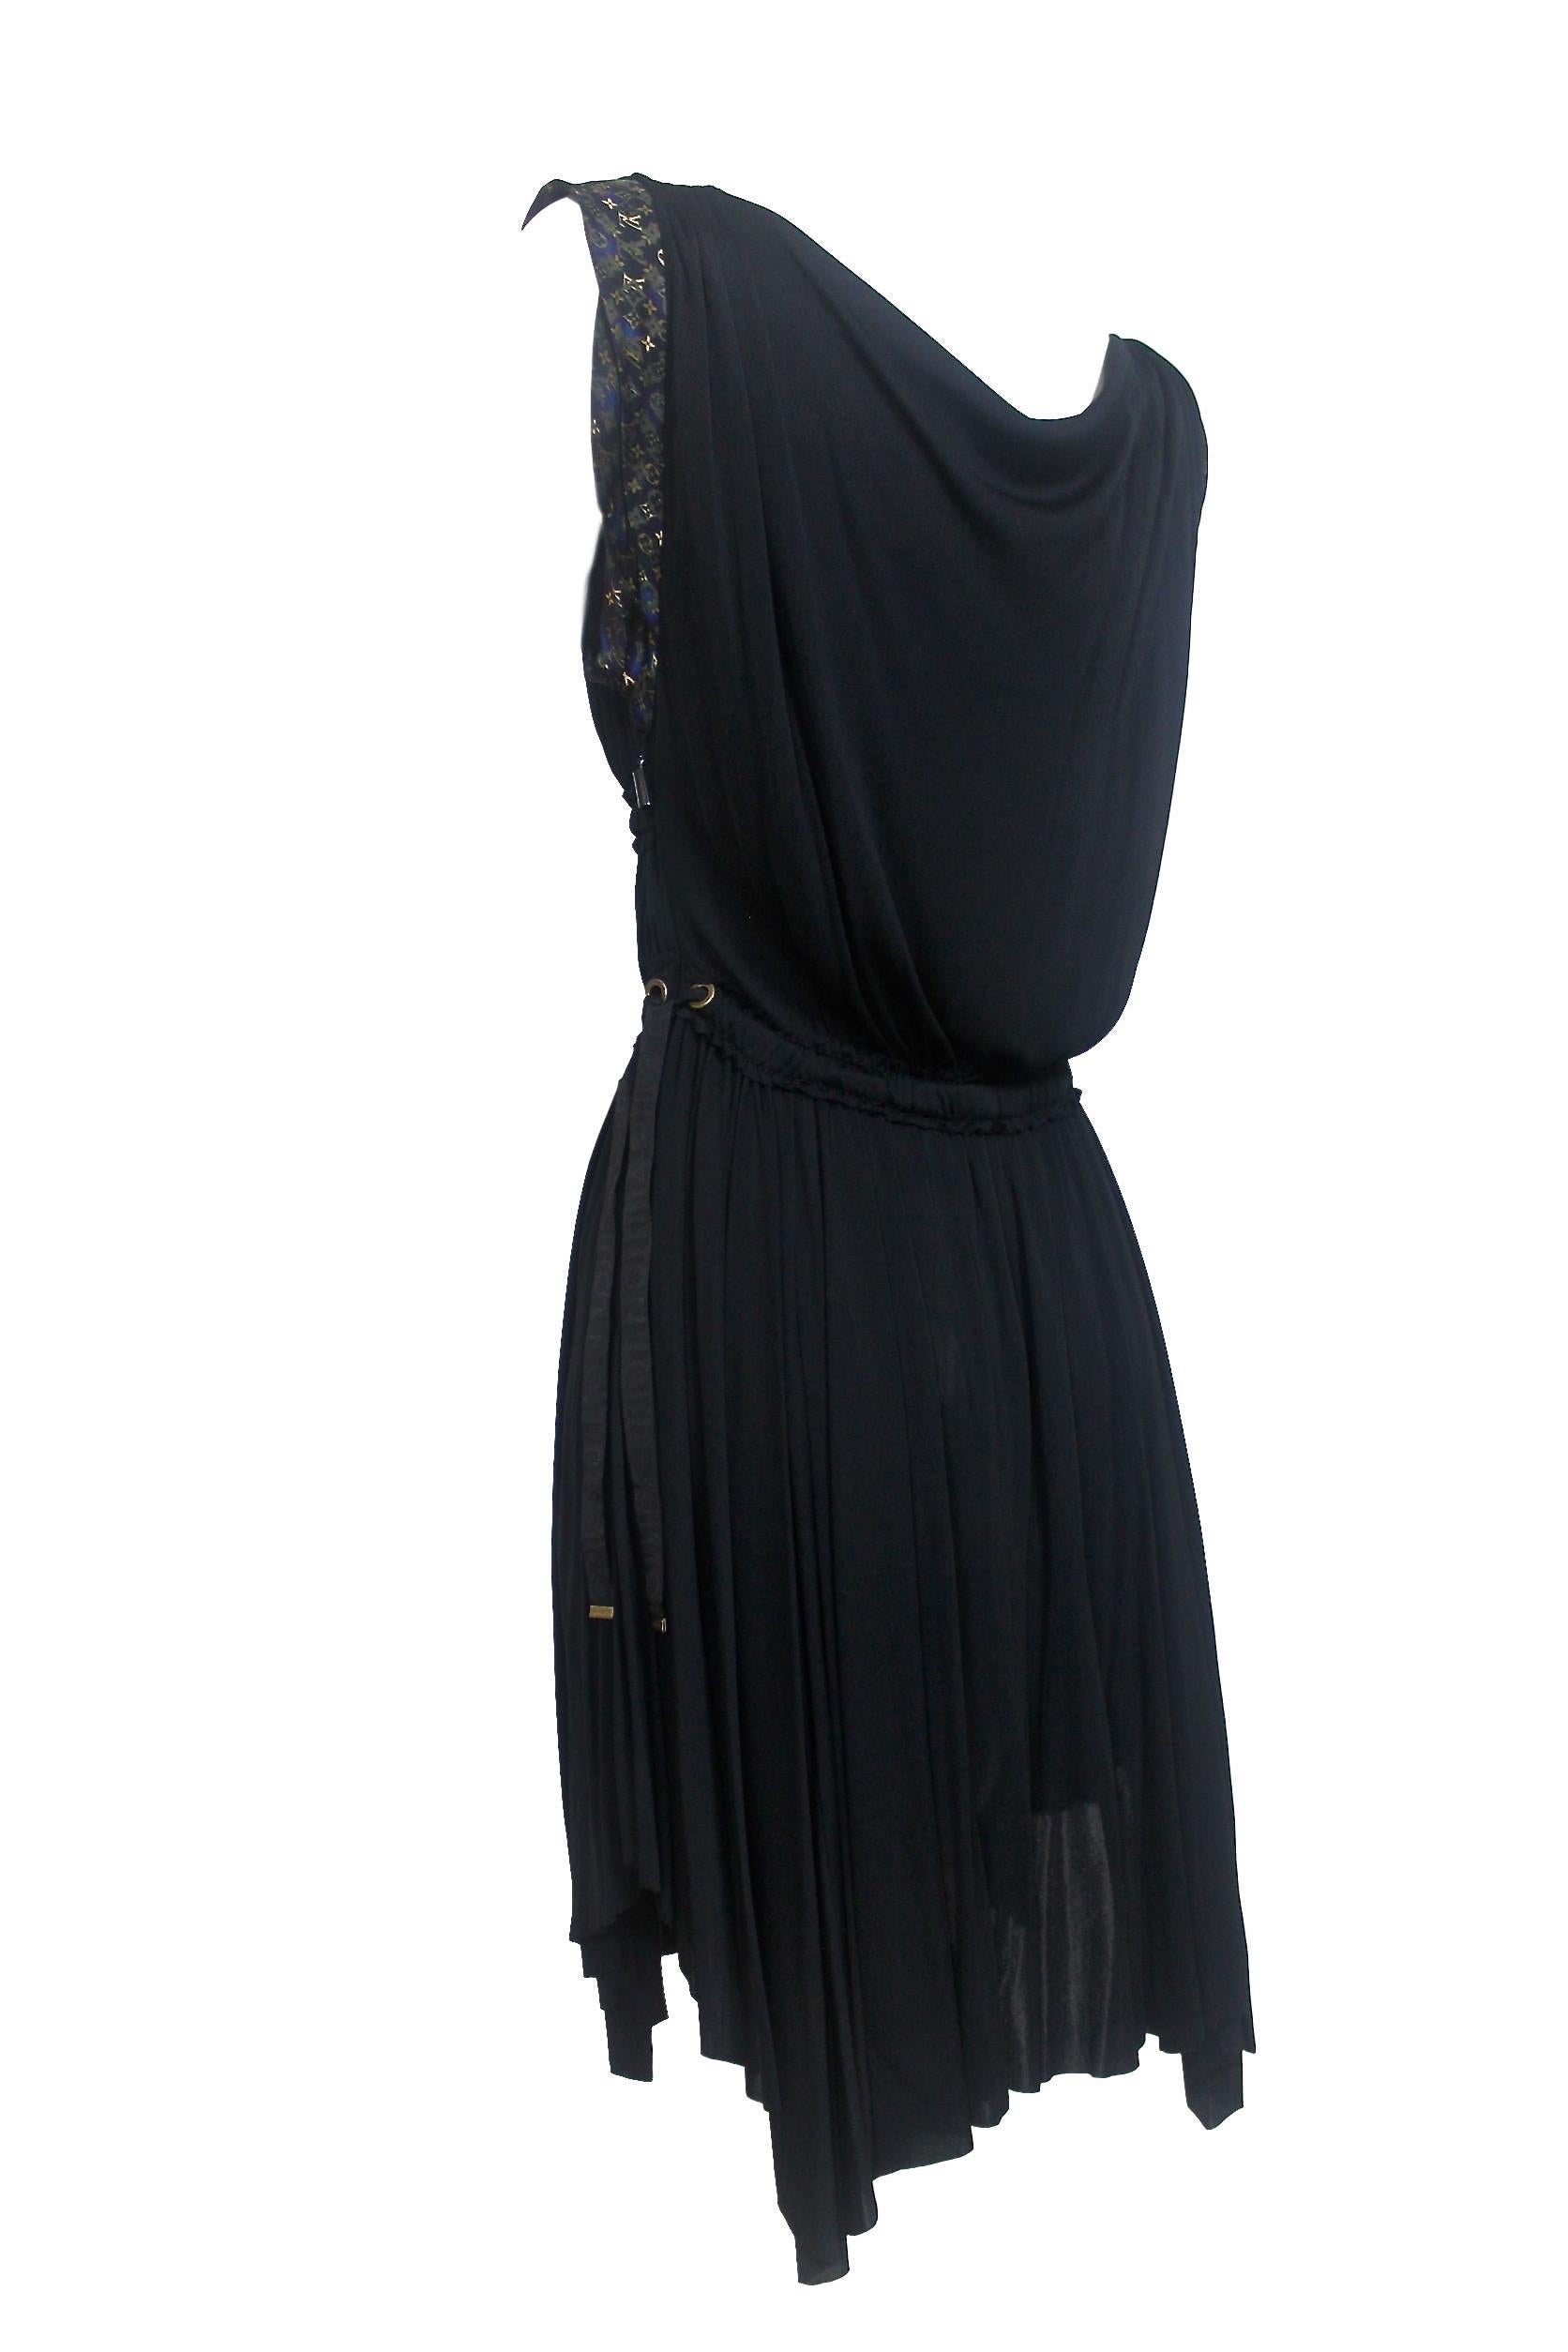 Women's Louis Vuitton Grecian Style Dress For Sale